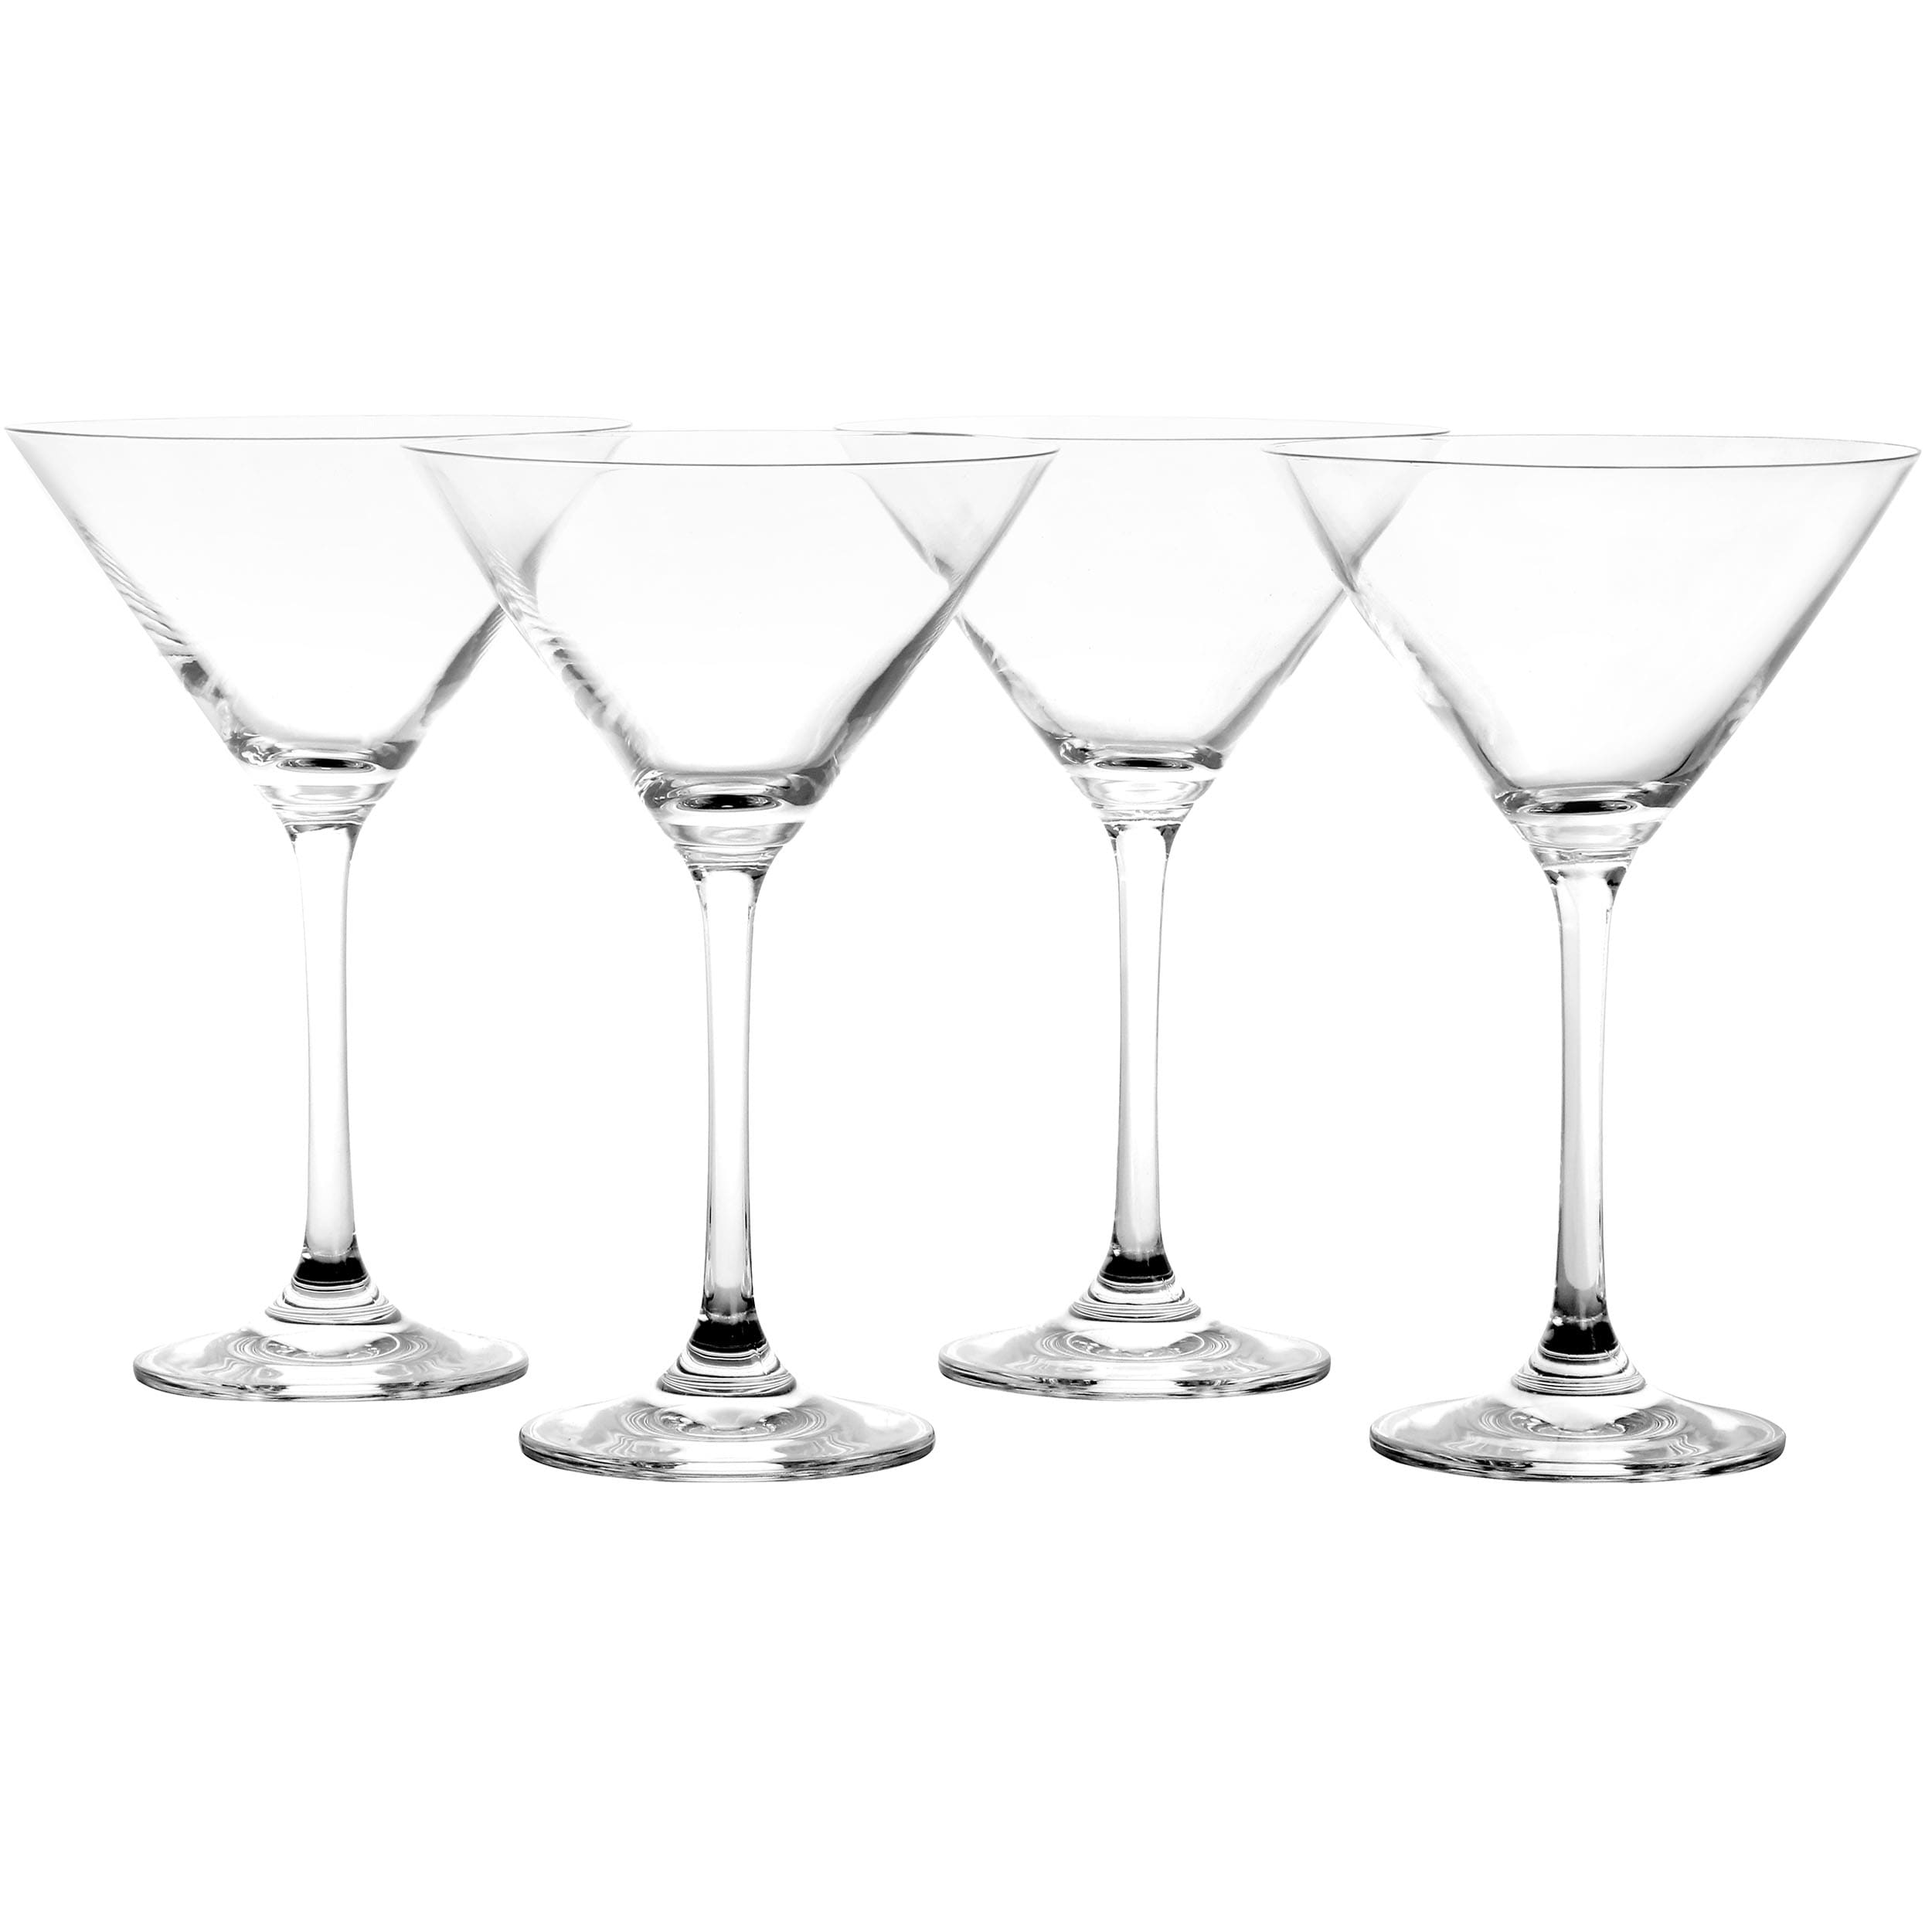 https://ak1.ostkcdn.com/images/products/is/images/direct/10f832fab46f8851f413733afd98bf65f33afd51/Martha-Stewart-4-Piece-10oz-Martini-Glass-Set.jpg